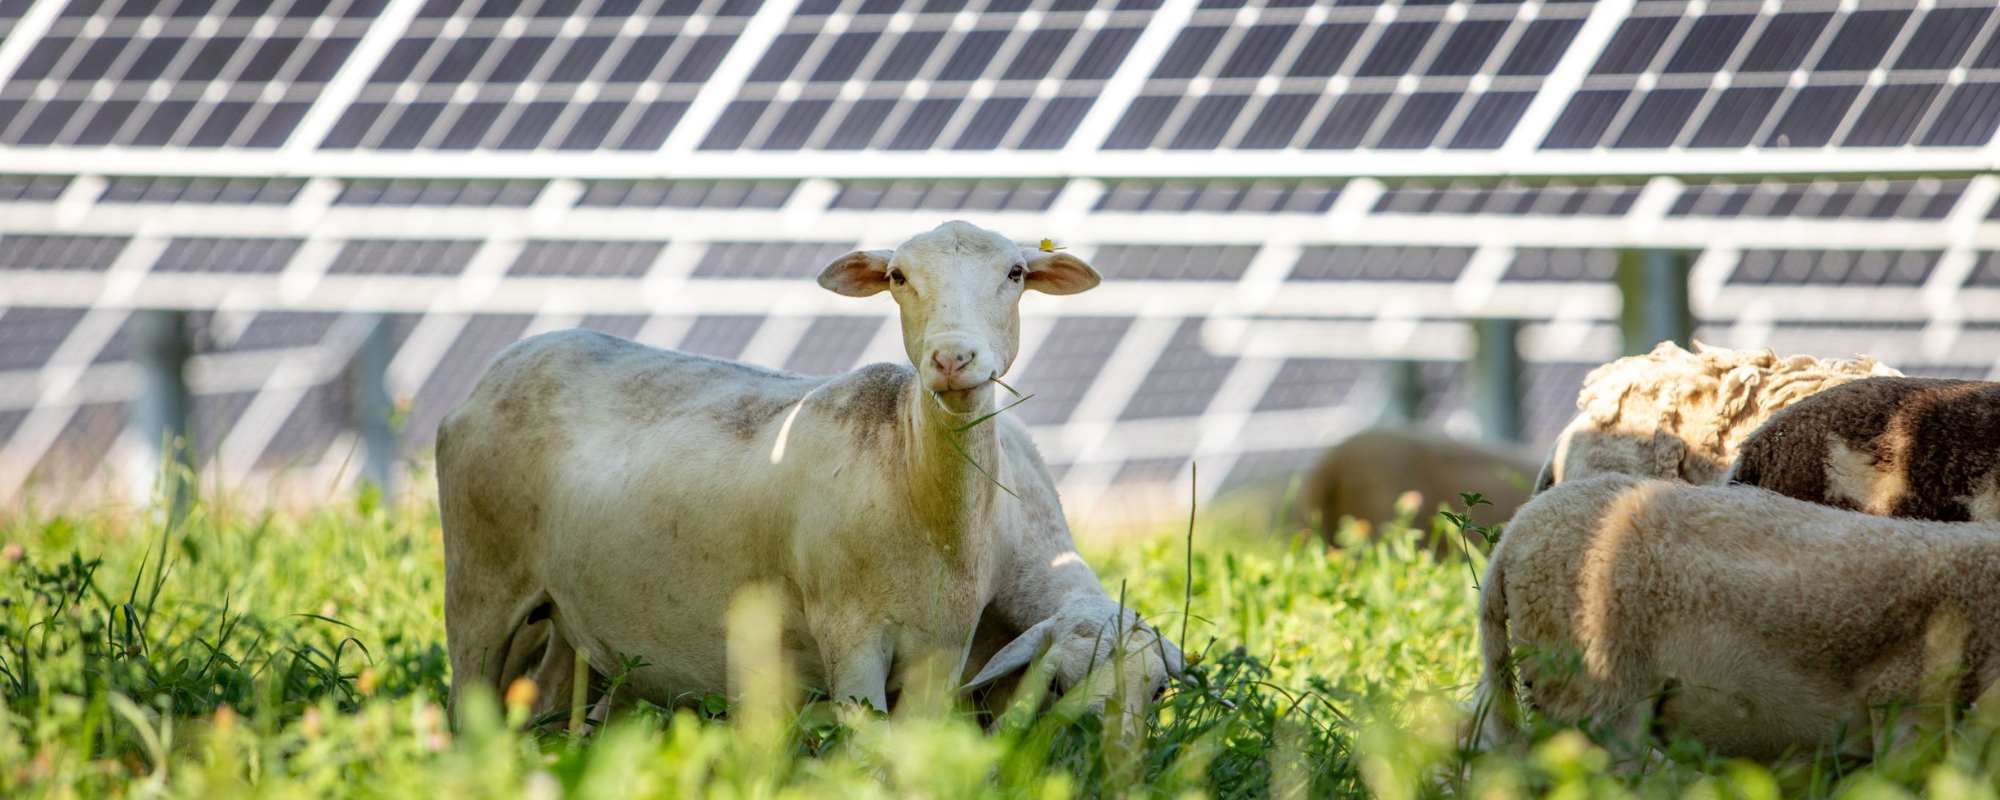 sheep under solar panels